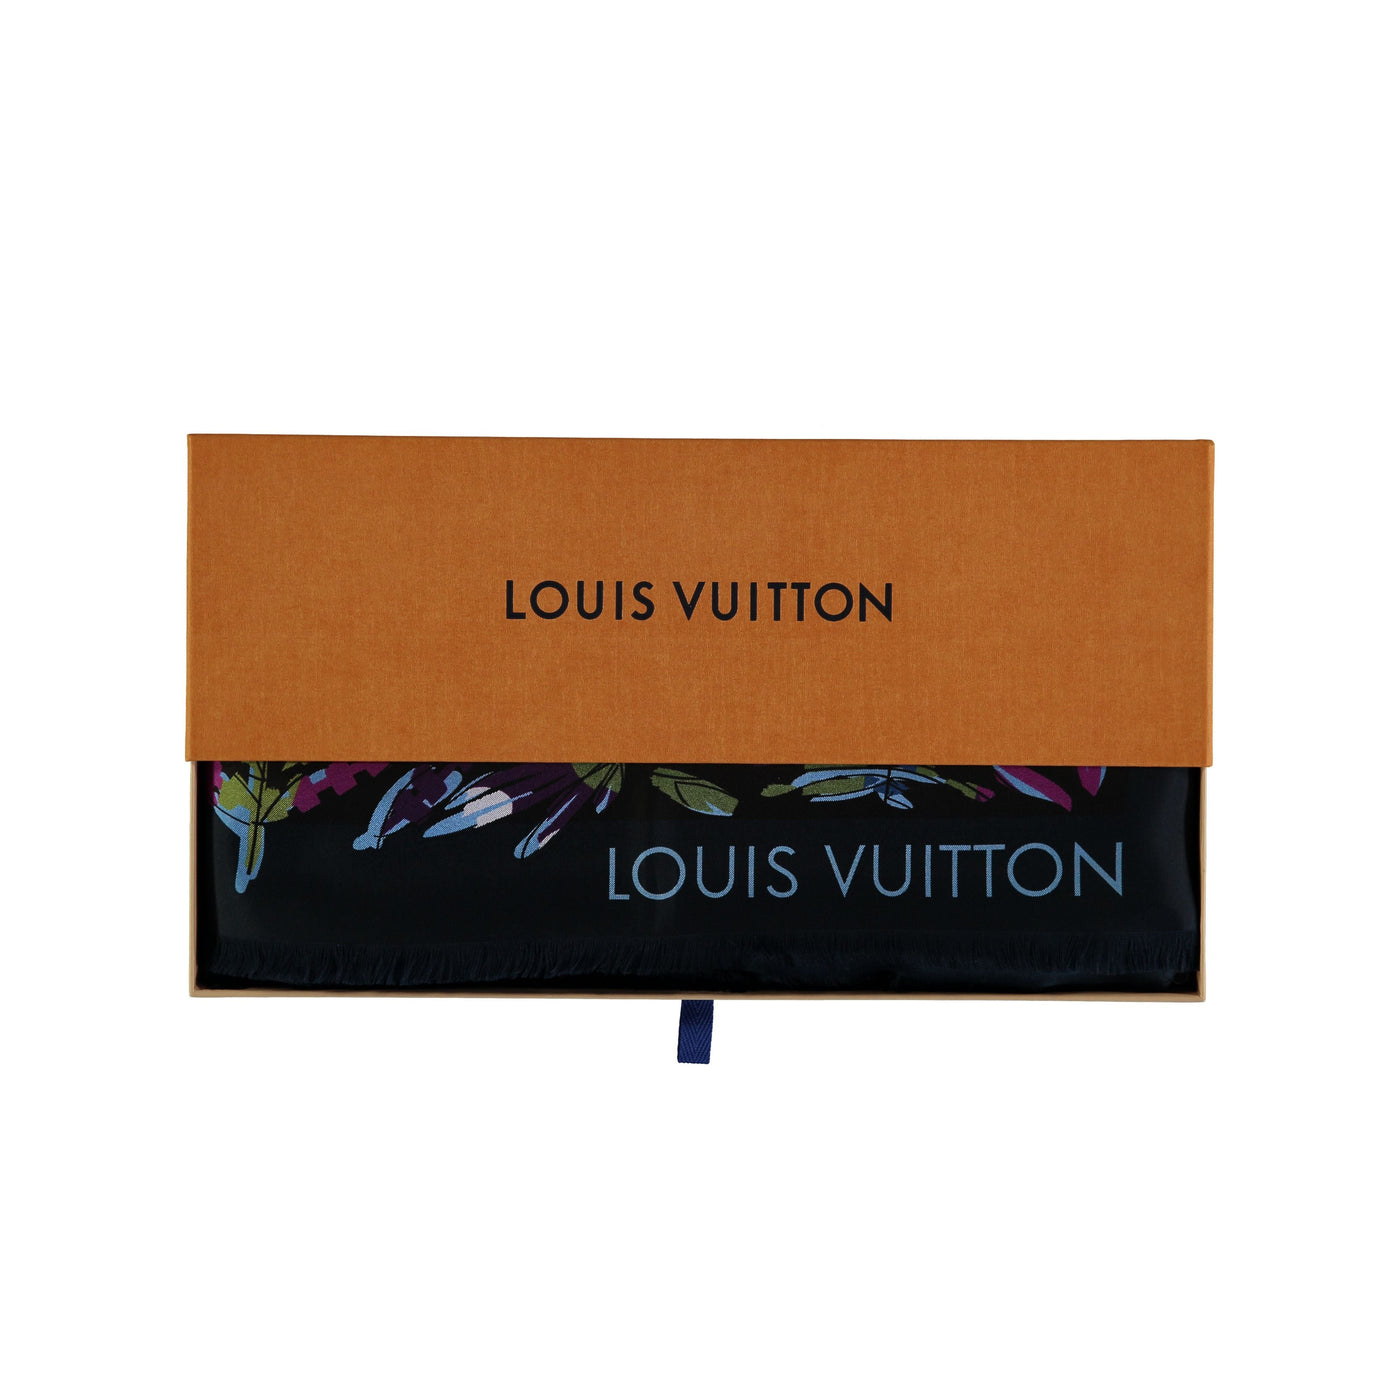 Secondhand Louis Vuitton Floral Silk Scarf